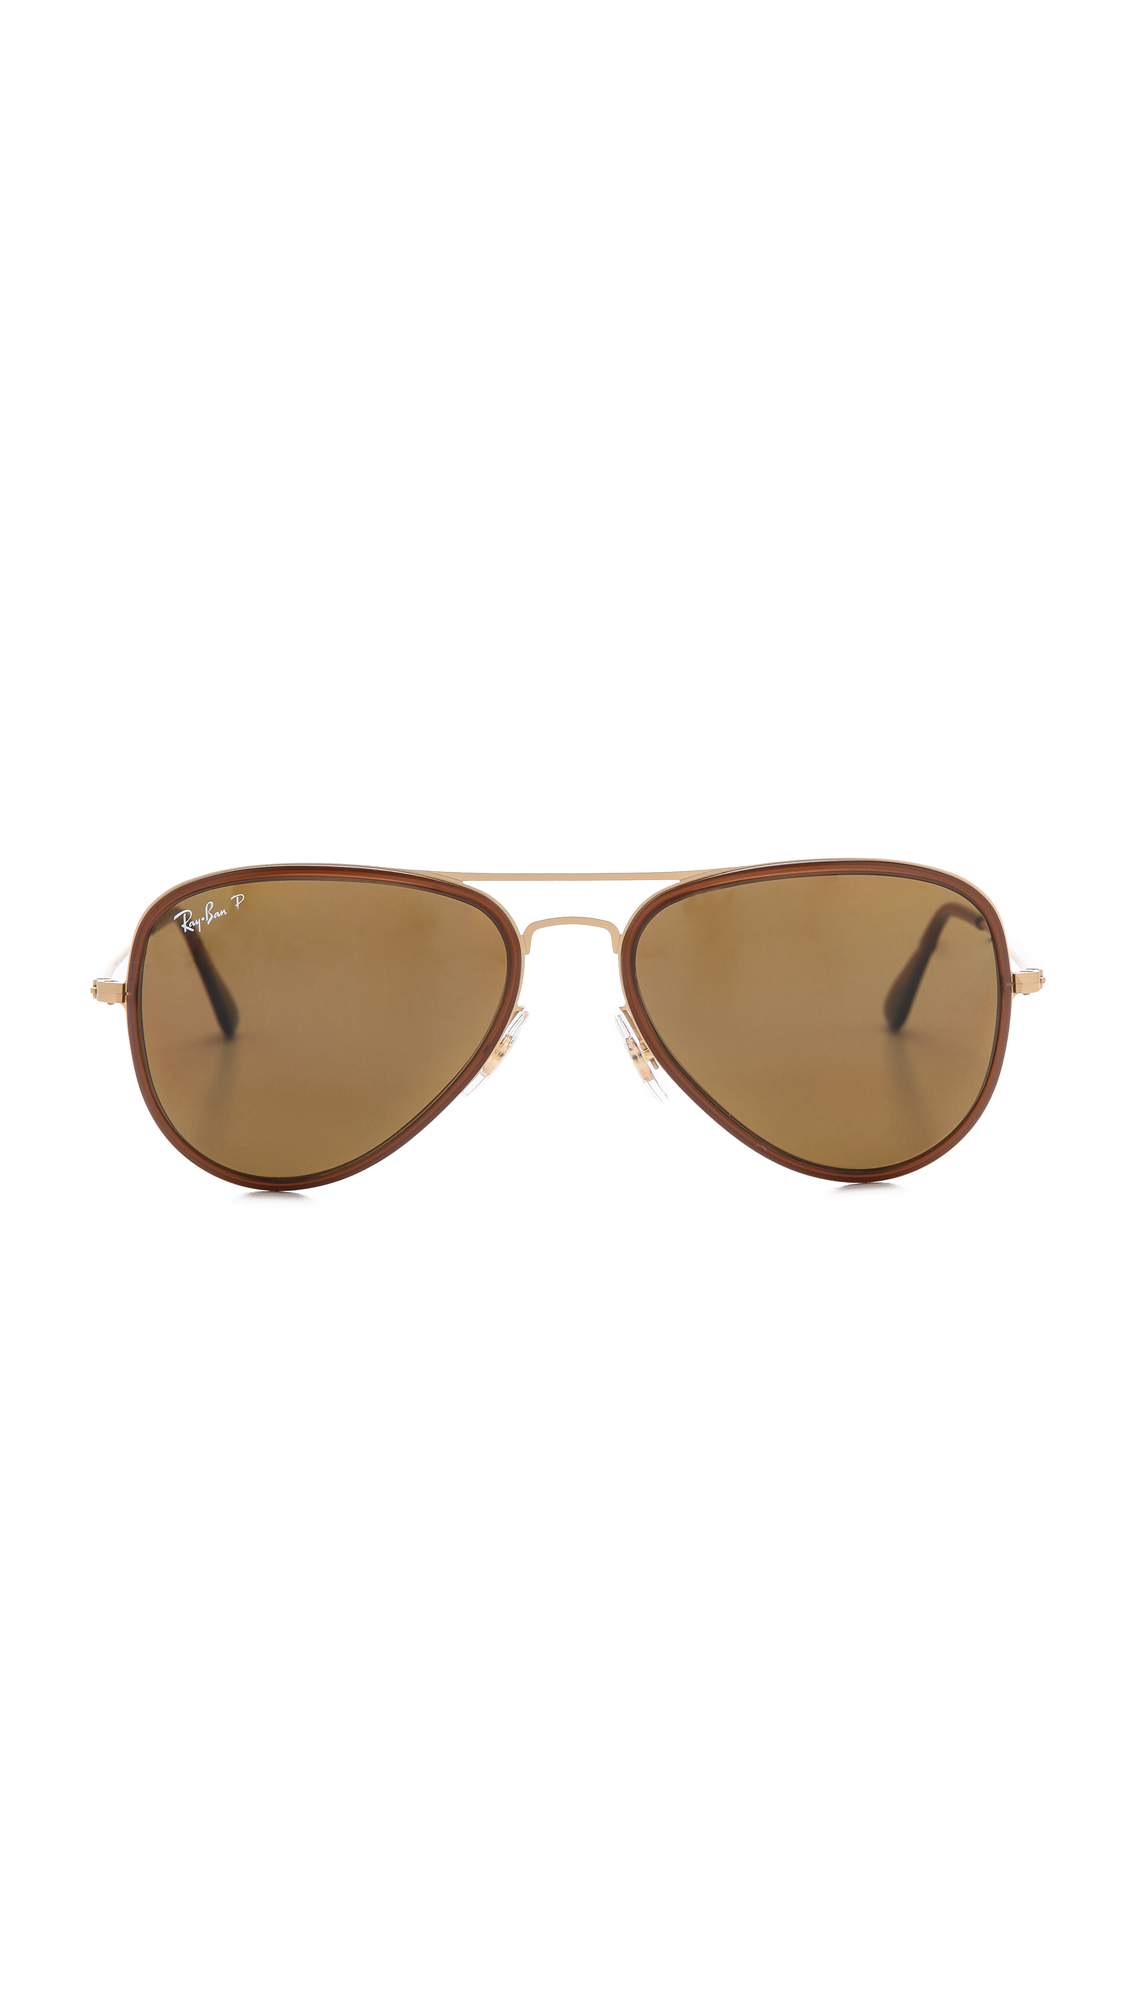 Lyst - Ray-Ban Icons Avator Polarized Sunglasses Sand